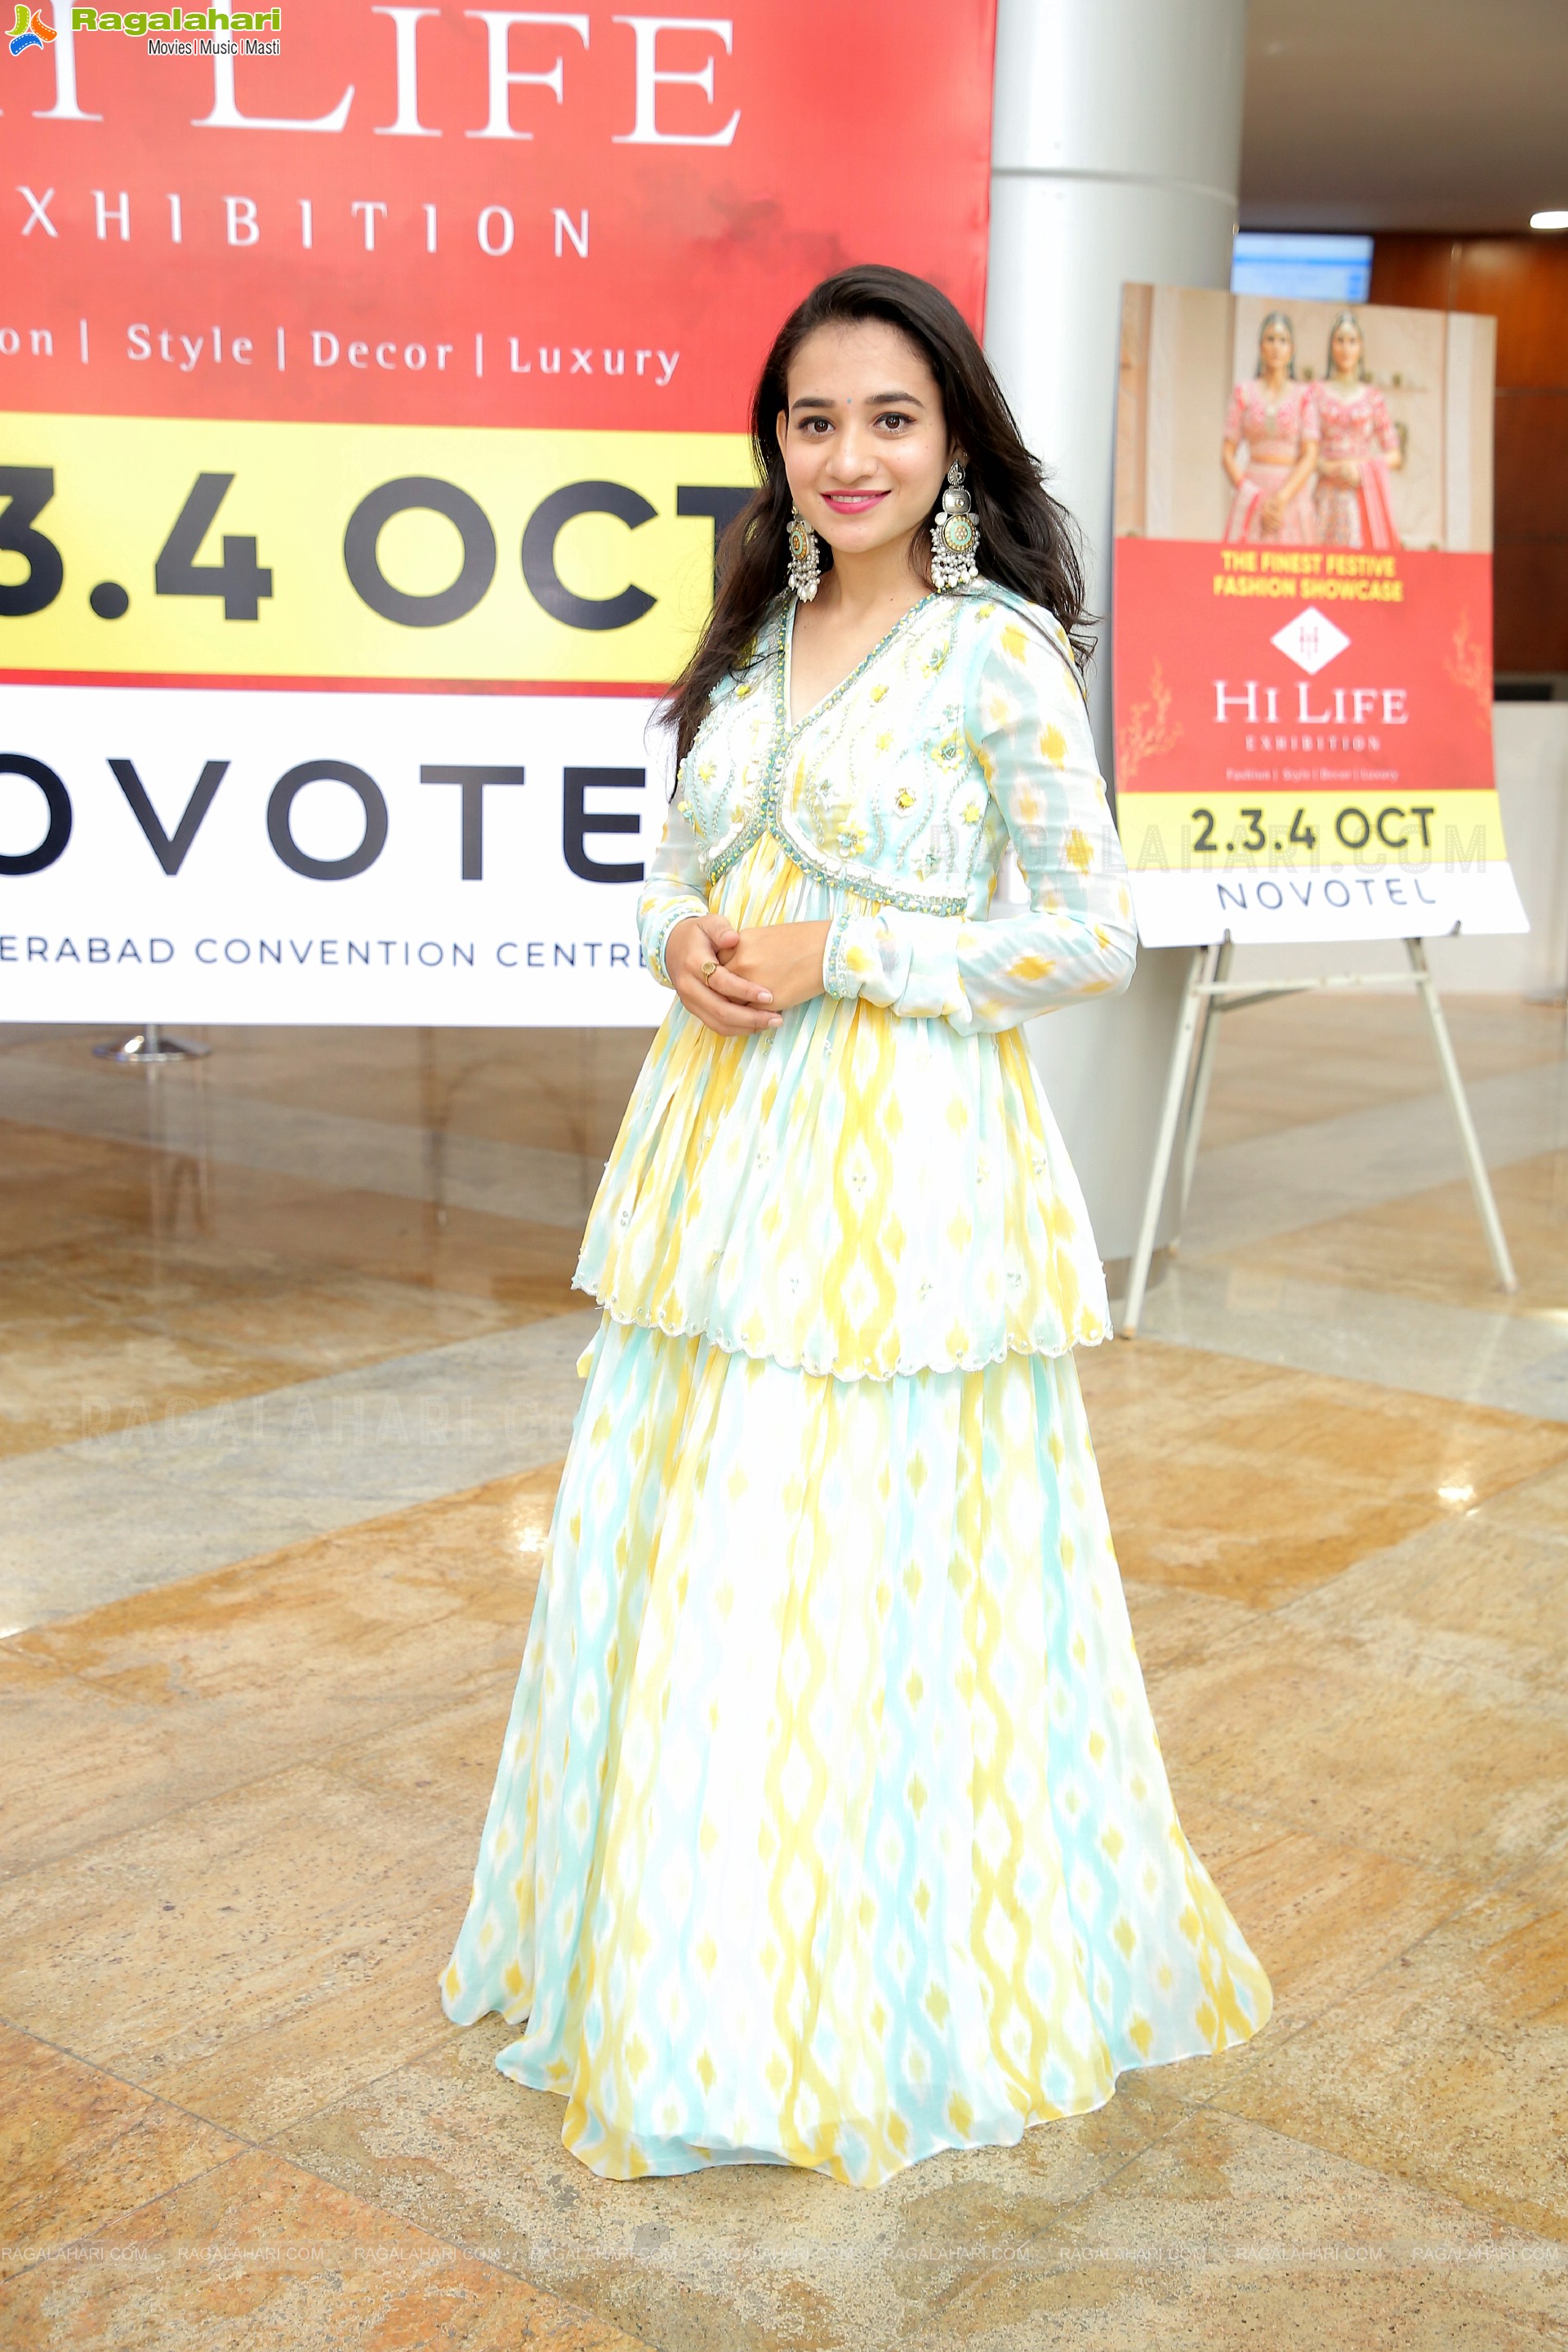 Hi Life Exhibition October 2022 Kicks Off at HICC-Novotel, Hyderabad